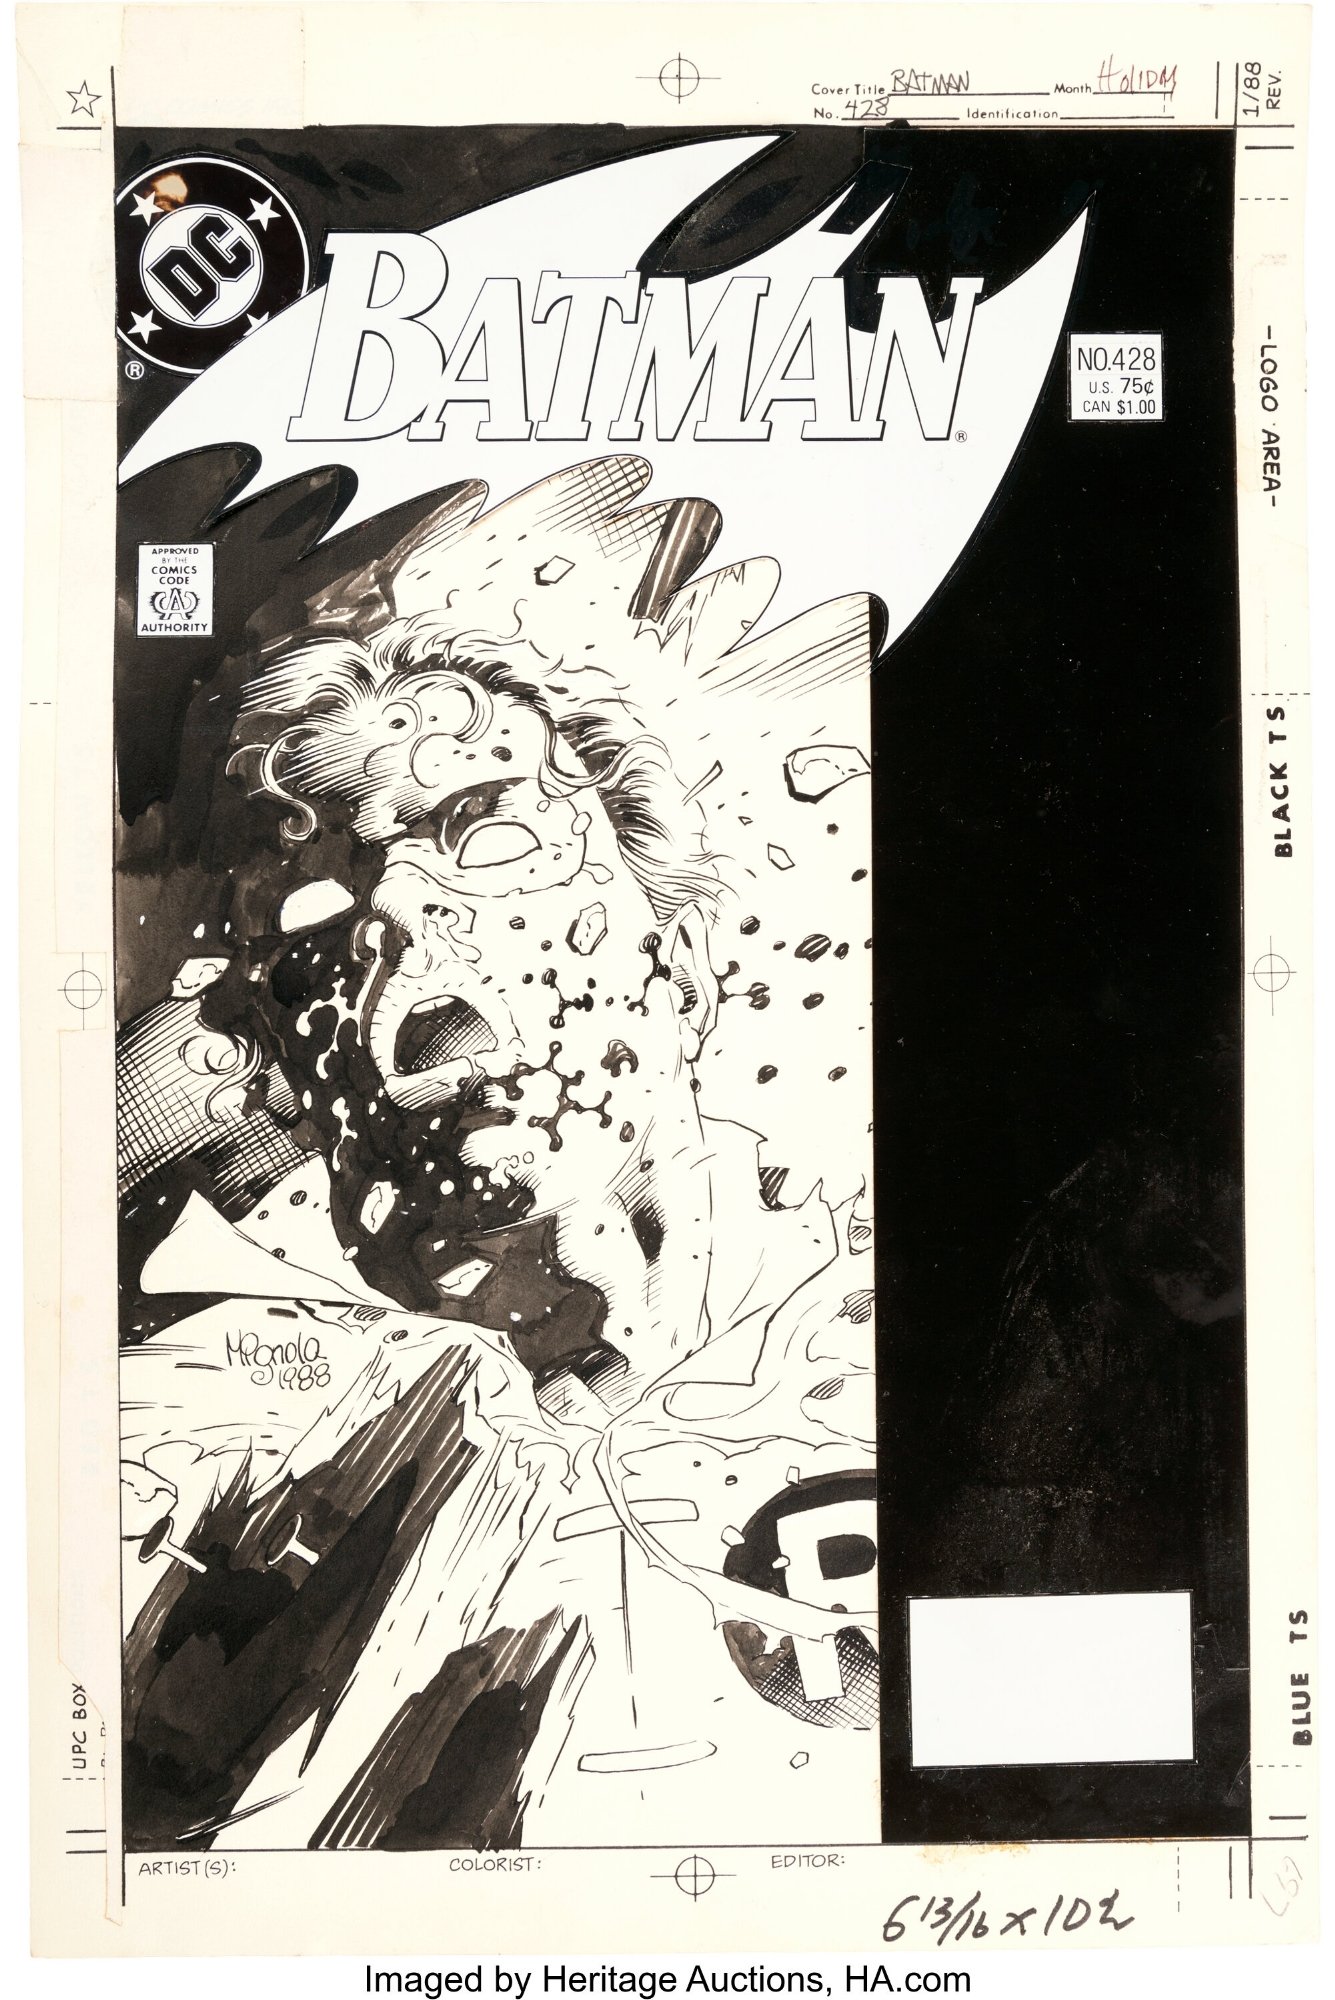 Batman #428 (DC, 1989), in Heritage Auctions Previews's 7274 Signature  Comic Art Auction June 16 - 19, 2022 Comic Art Gallery Room